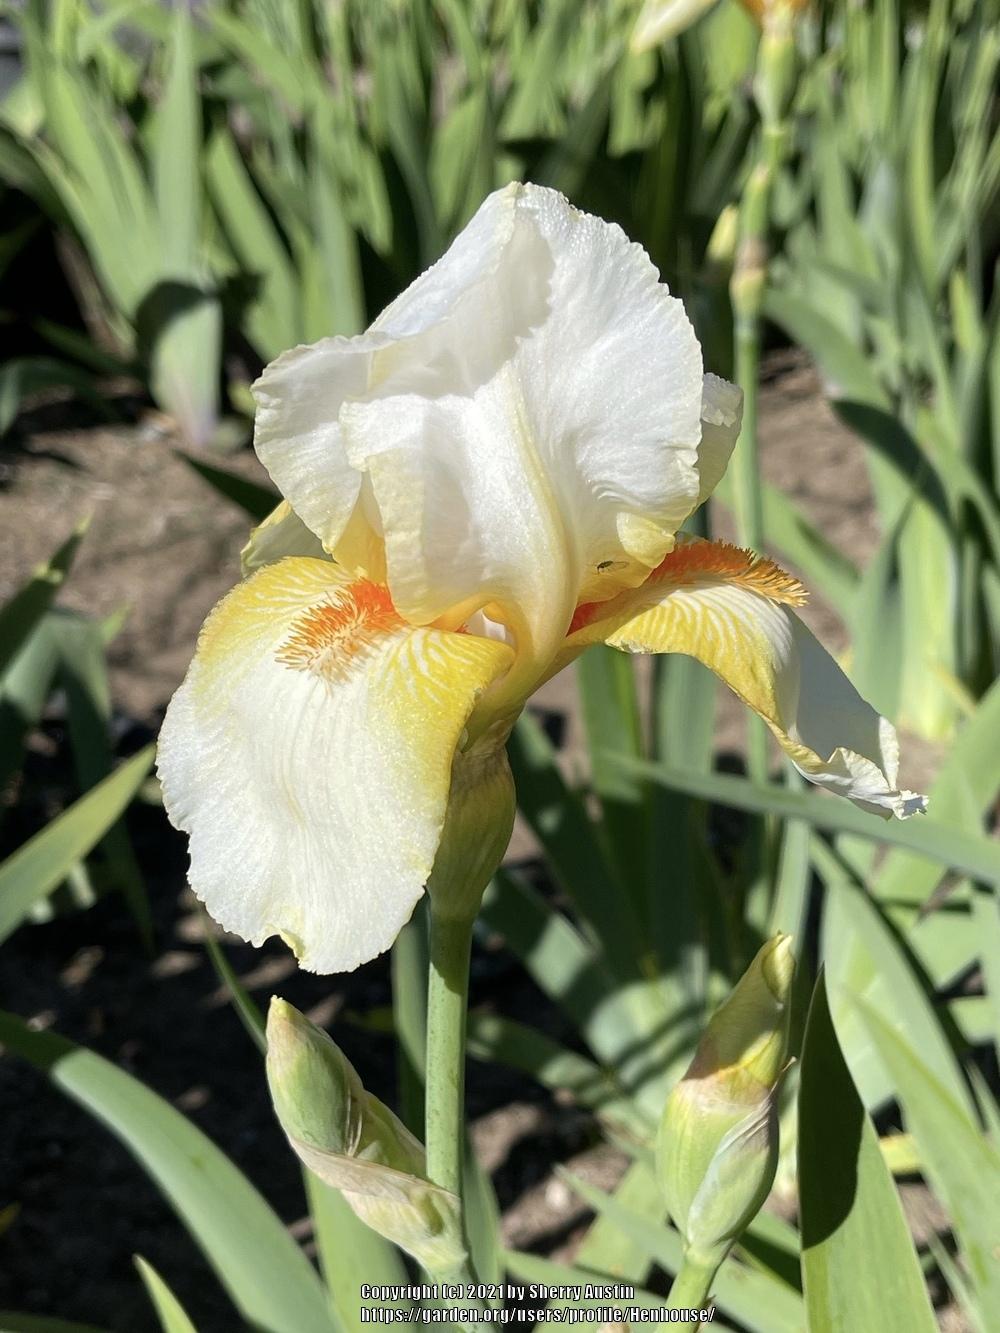 Photo of Tall Bearded Iris (Iris 'Gay Pal') uploaded by Henhouse